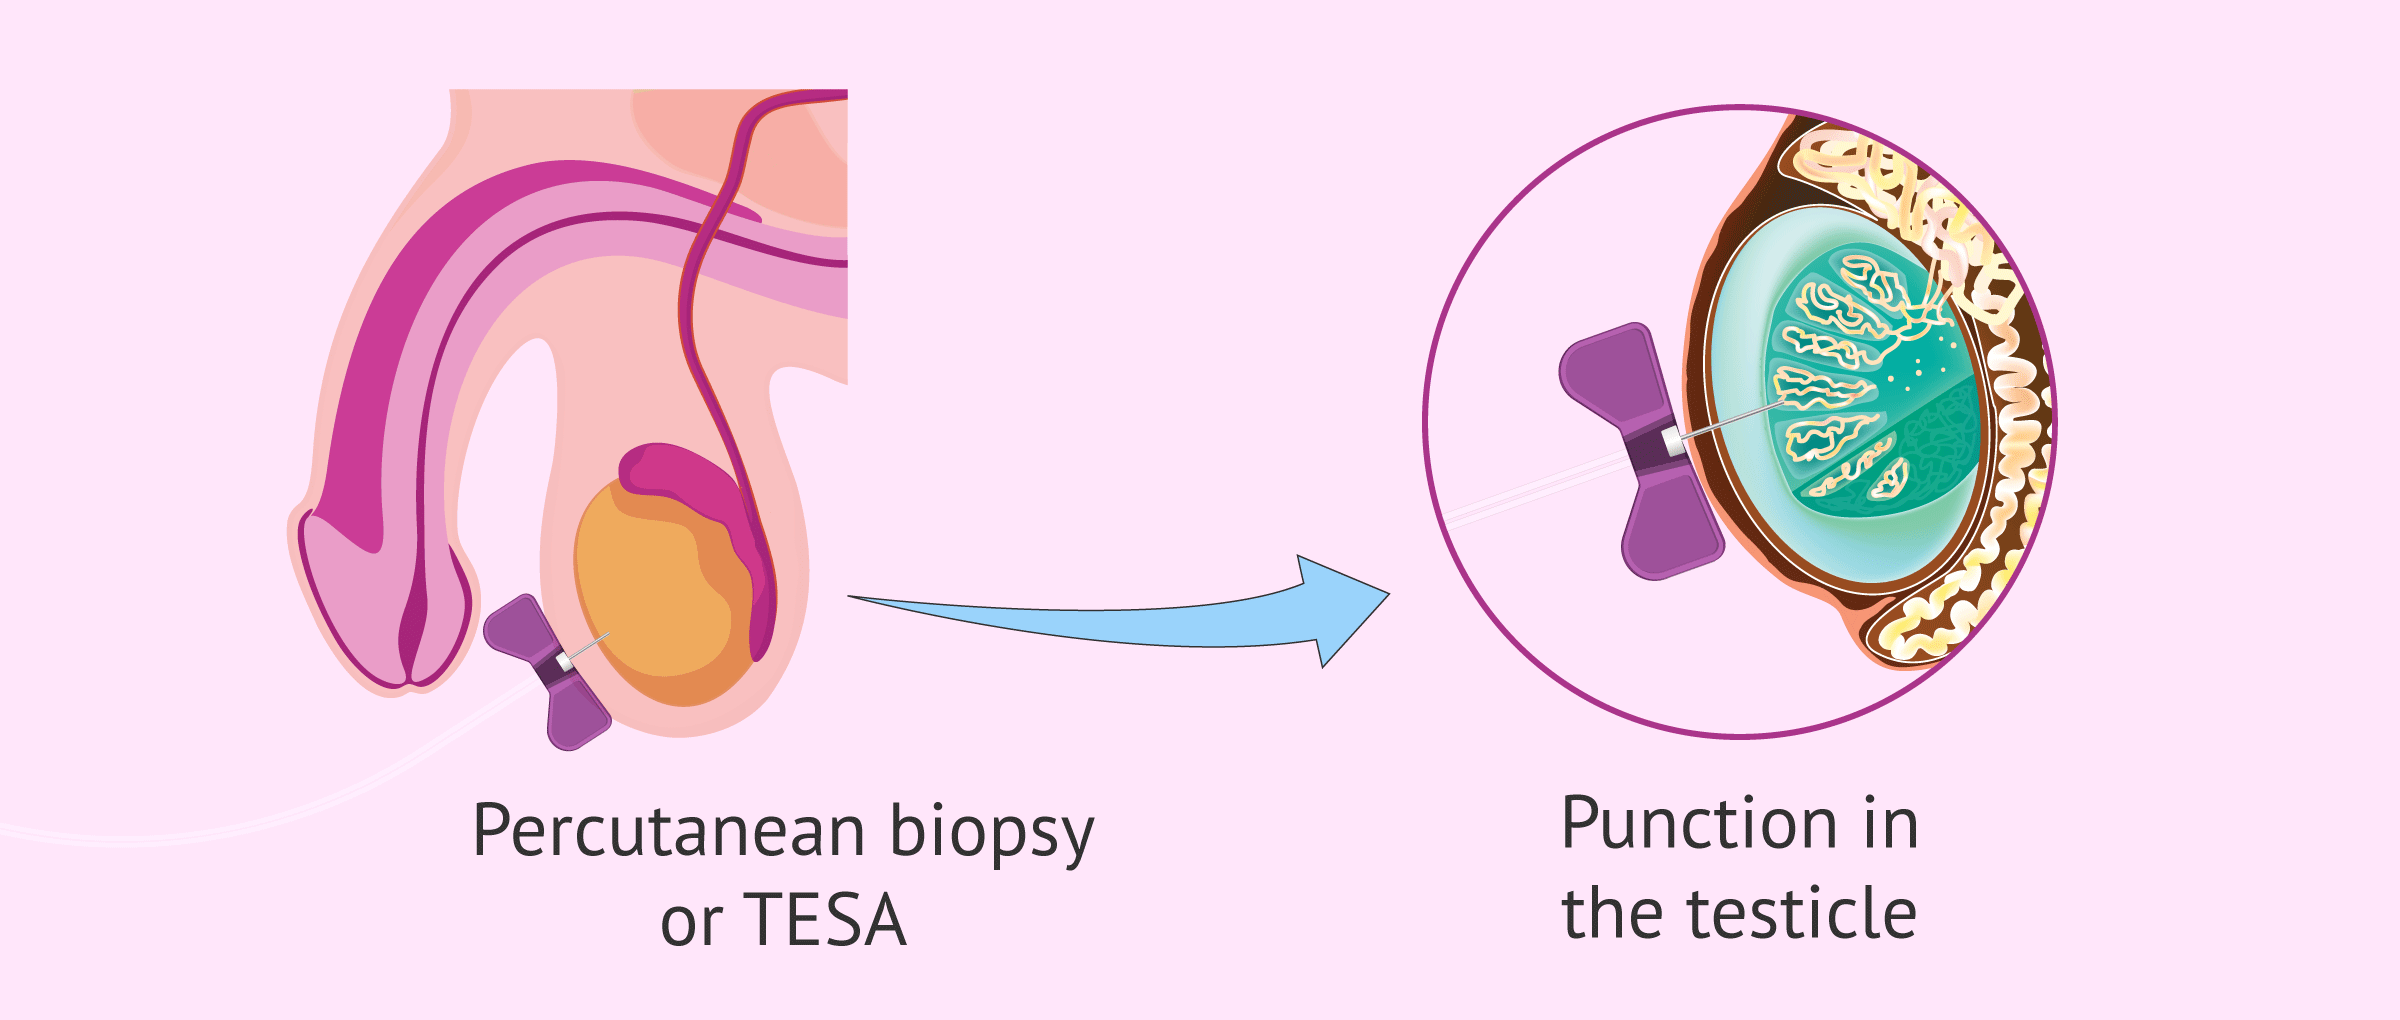 Percutaneous Testicular Biopsy (TESA)